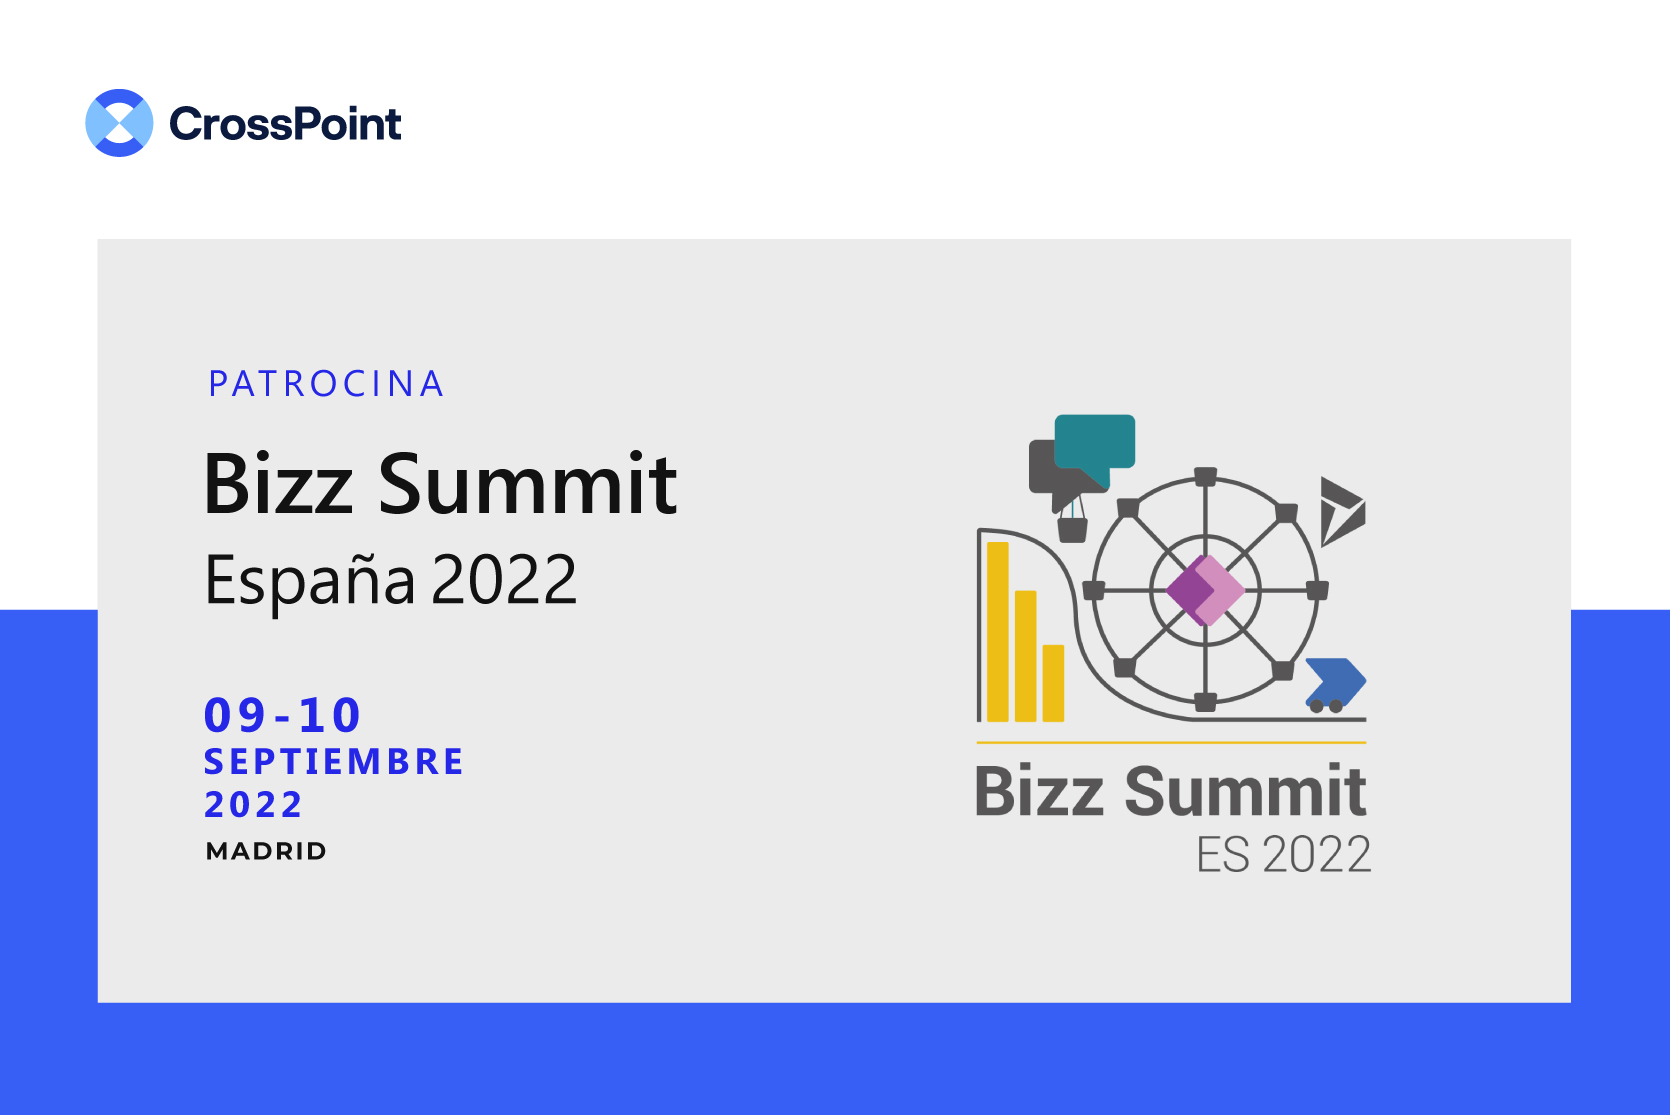 Cartel que anuncia a CrossPoint como patrocinadores de Bizz Summit España 2022